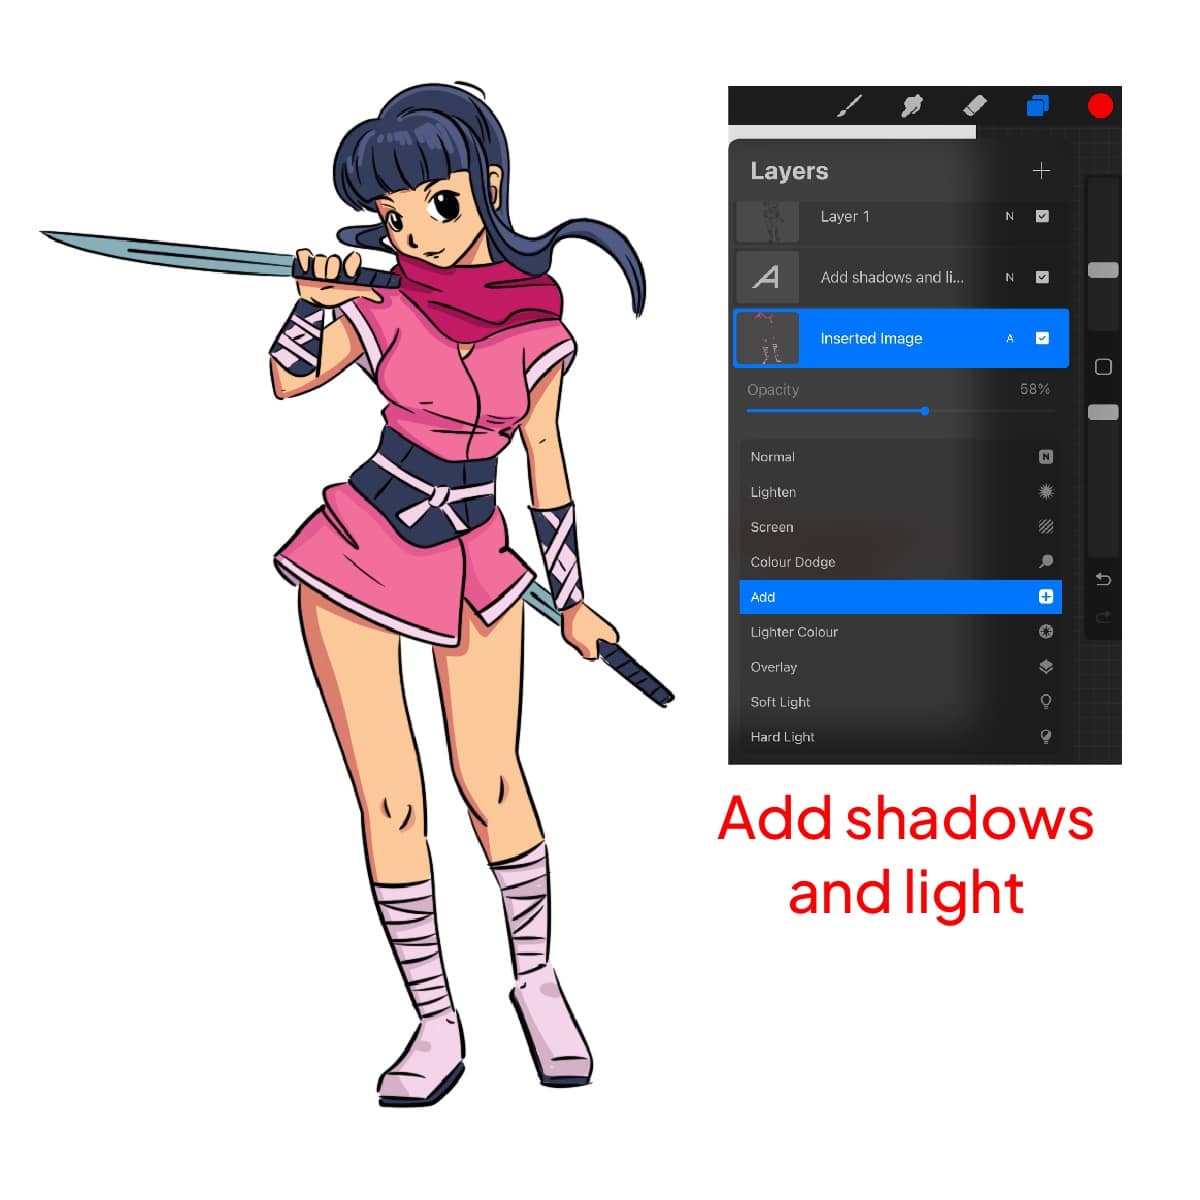 Adding shadows and light